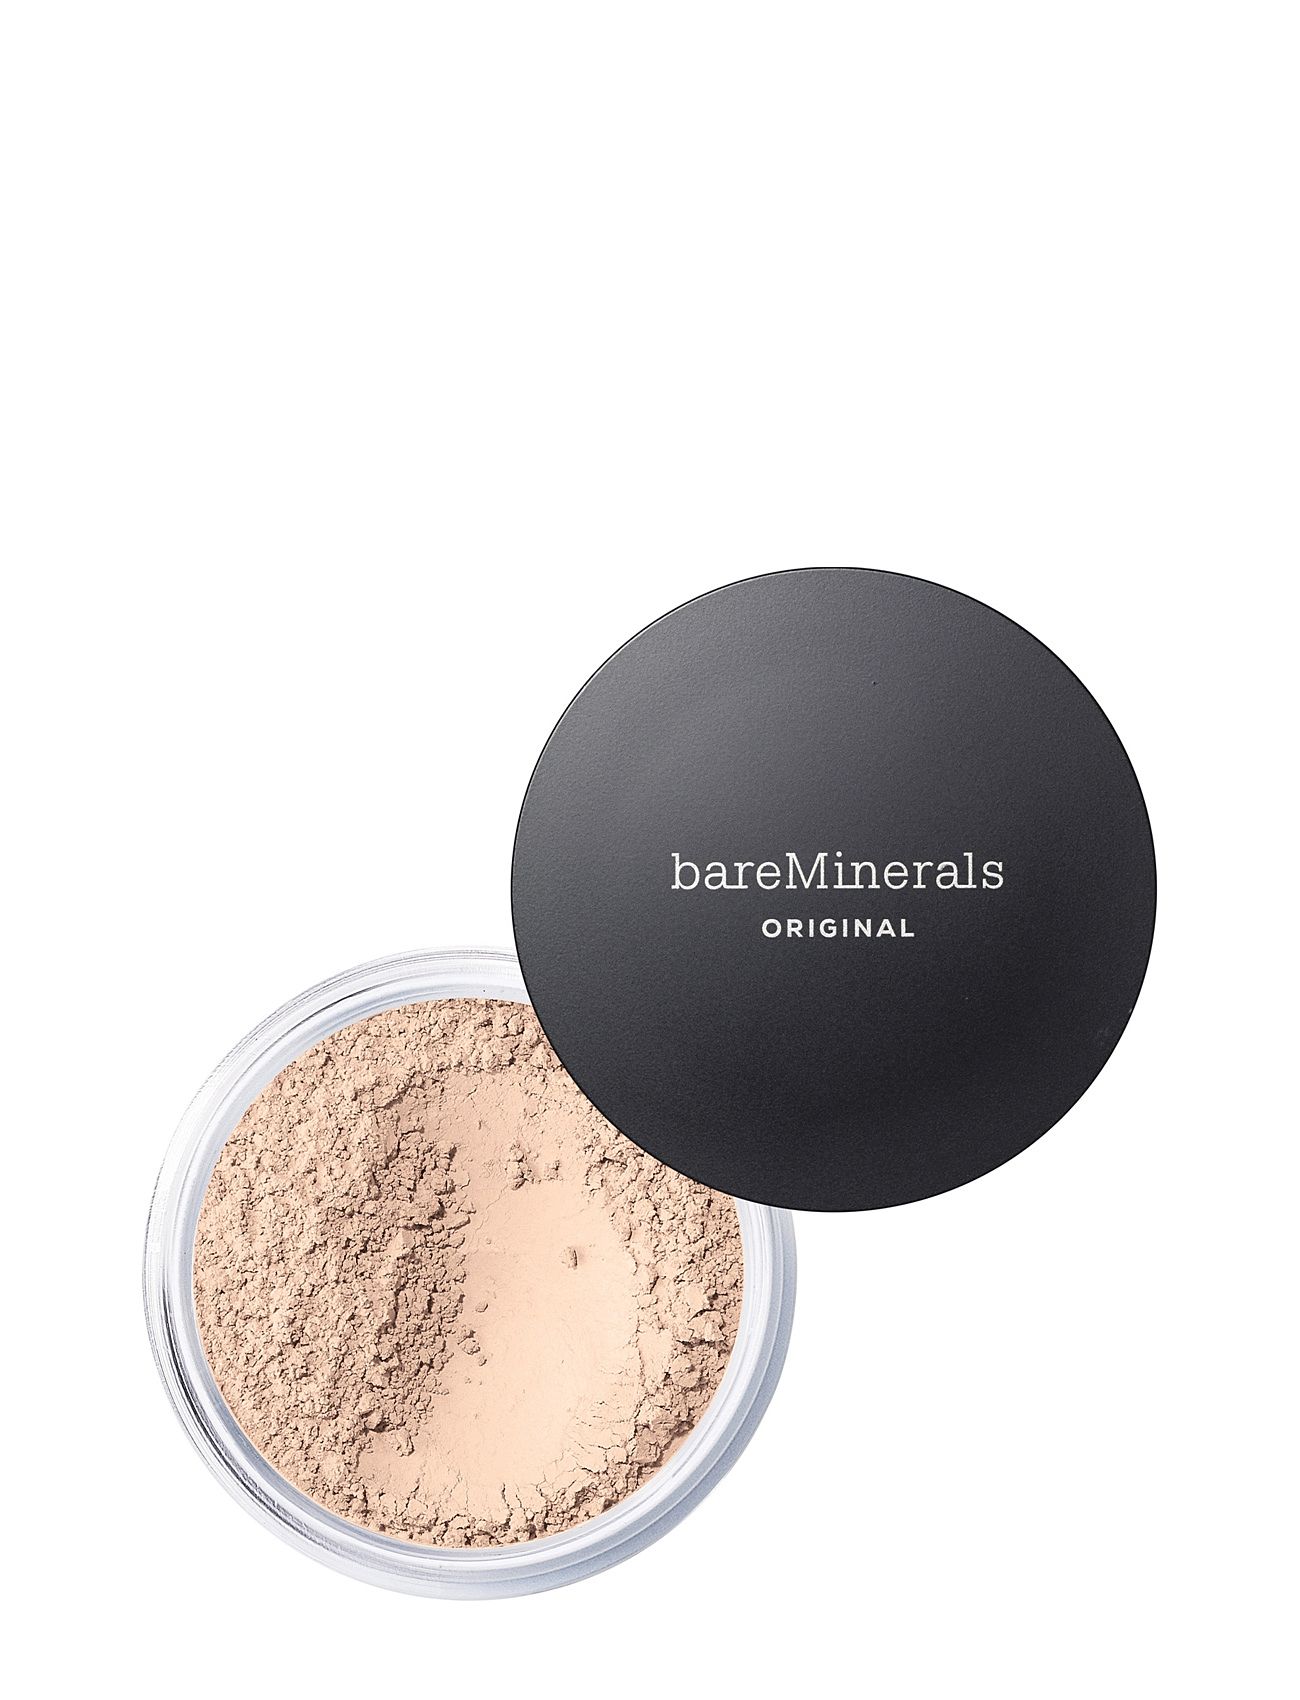 Bare Minerals Original Loose Foundation Fairly Medium  05 Foundation Makeup BareMinerals